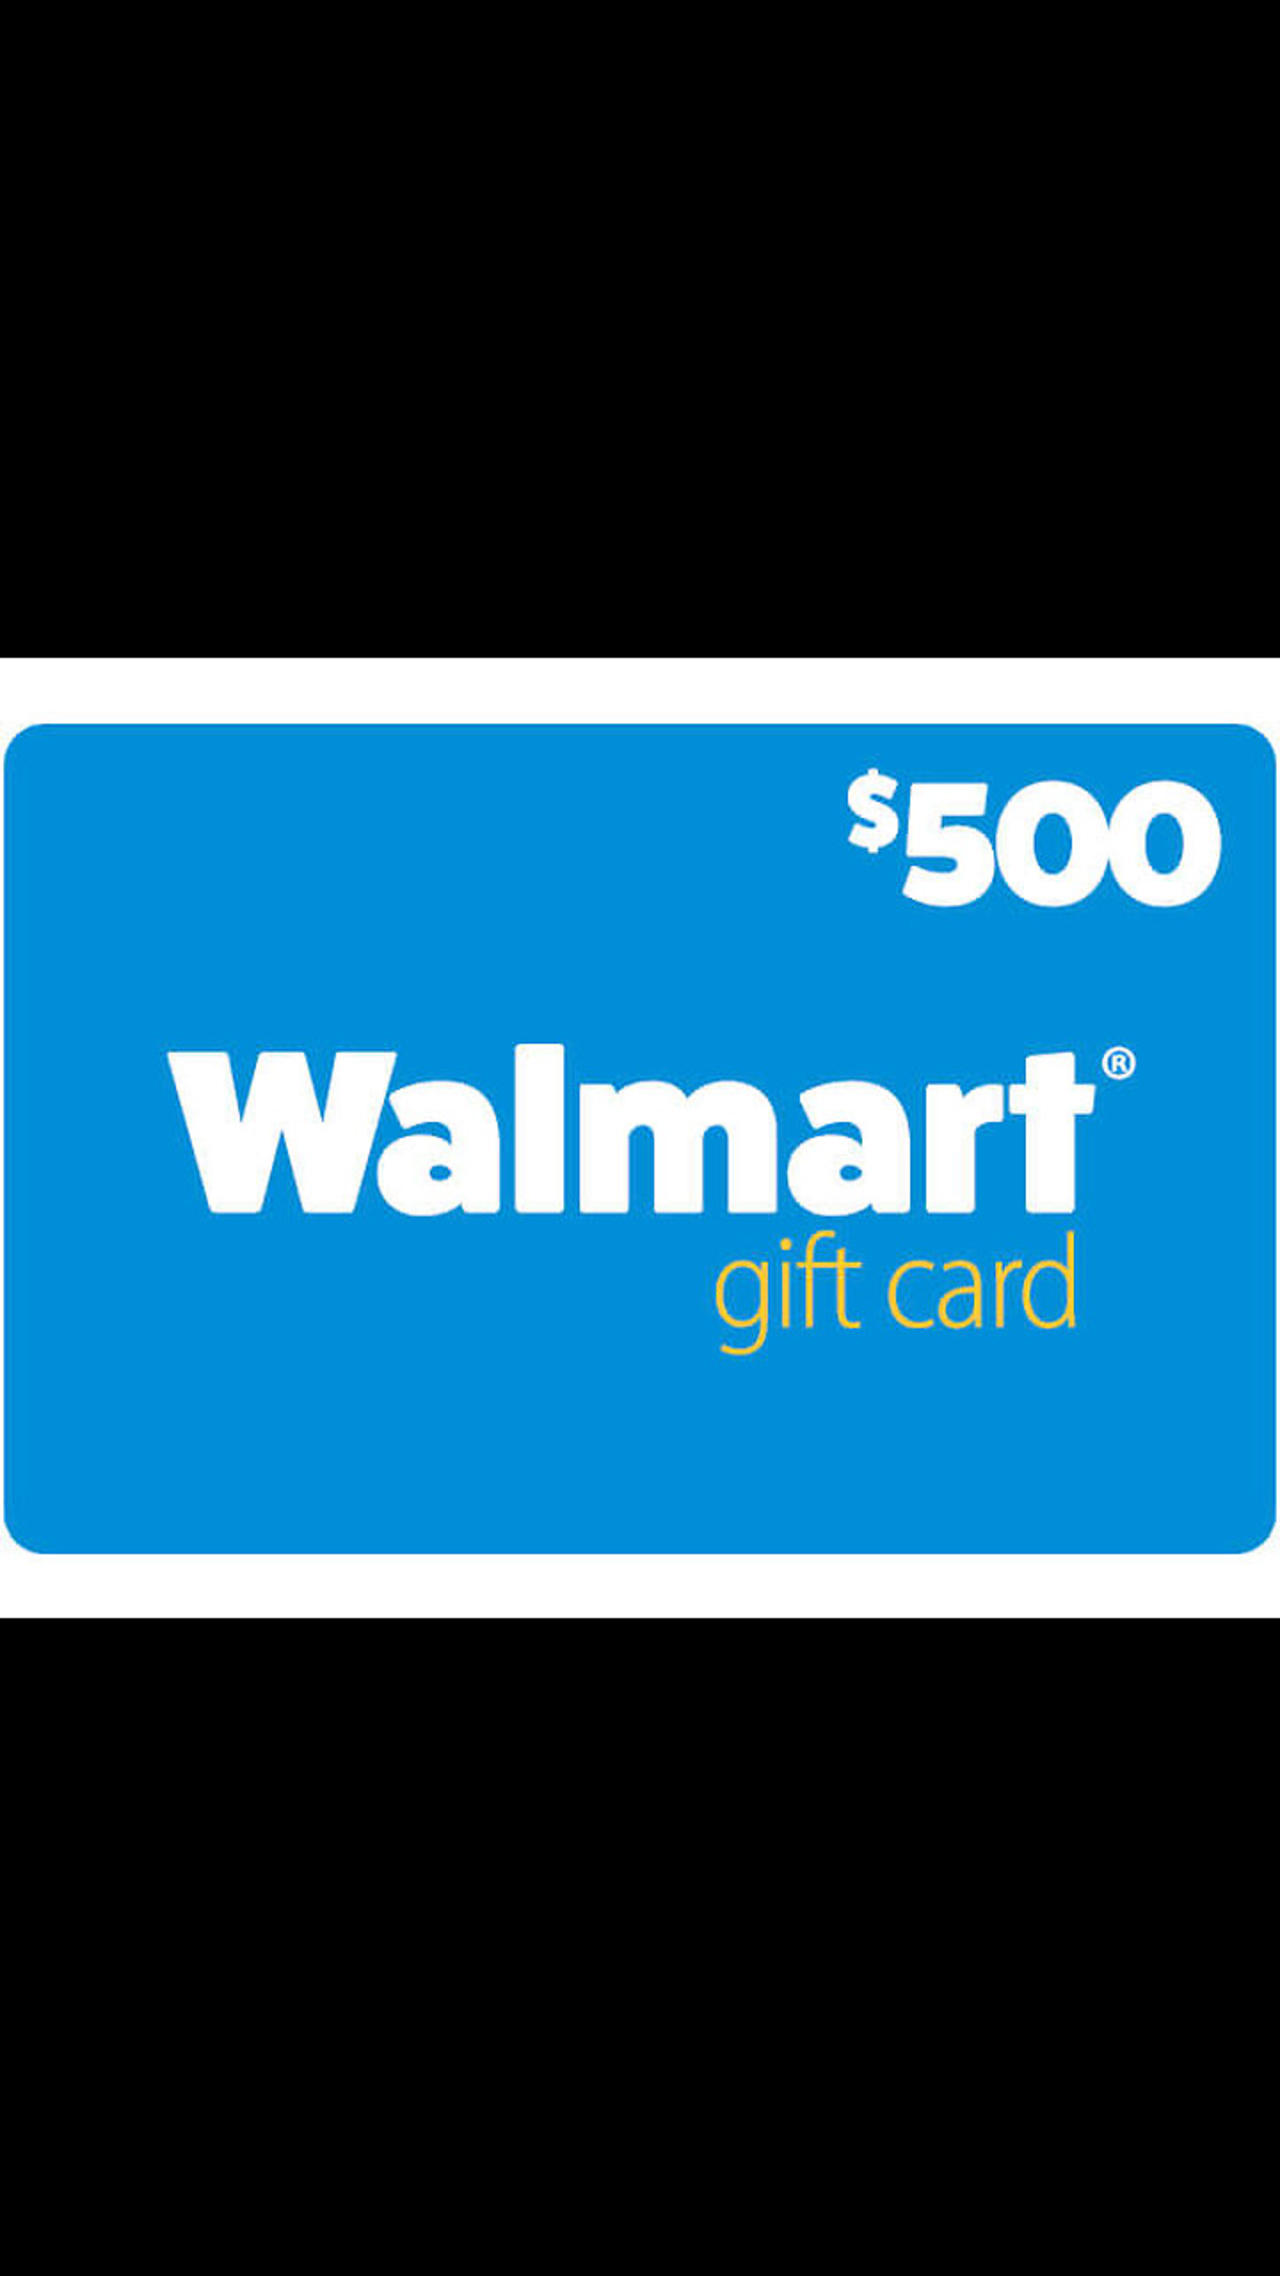 Get a $500 Walmart gift card now!